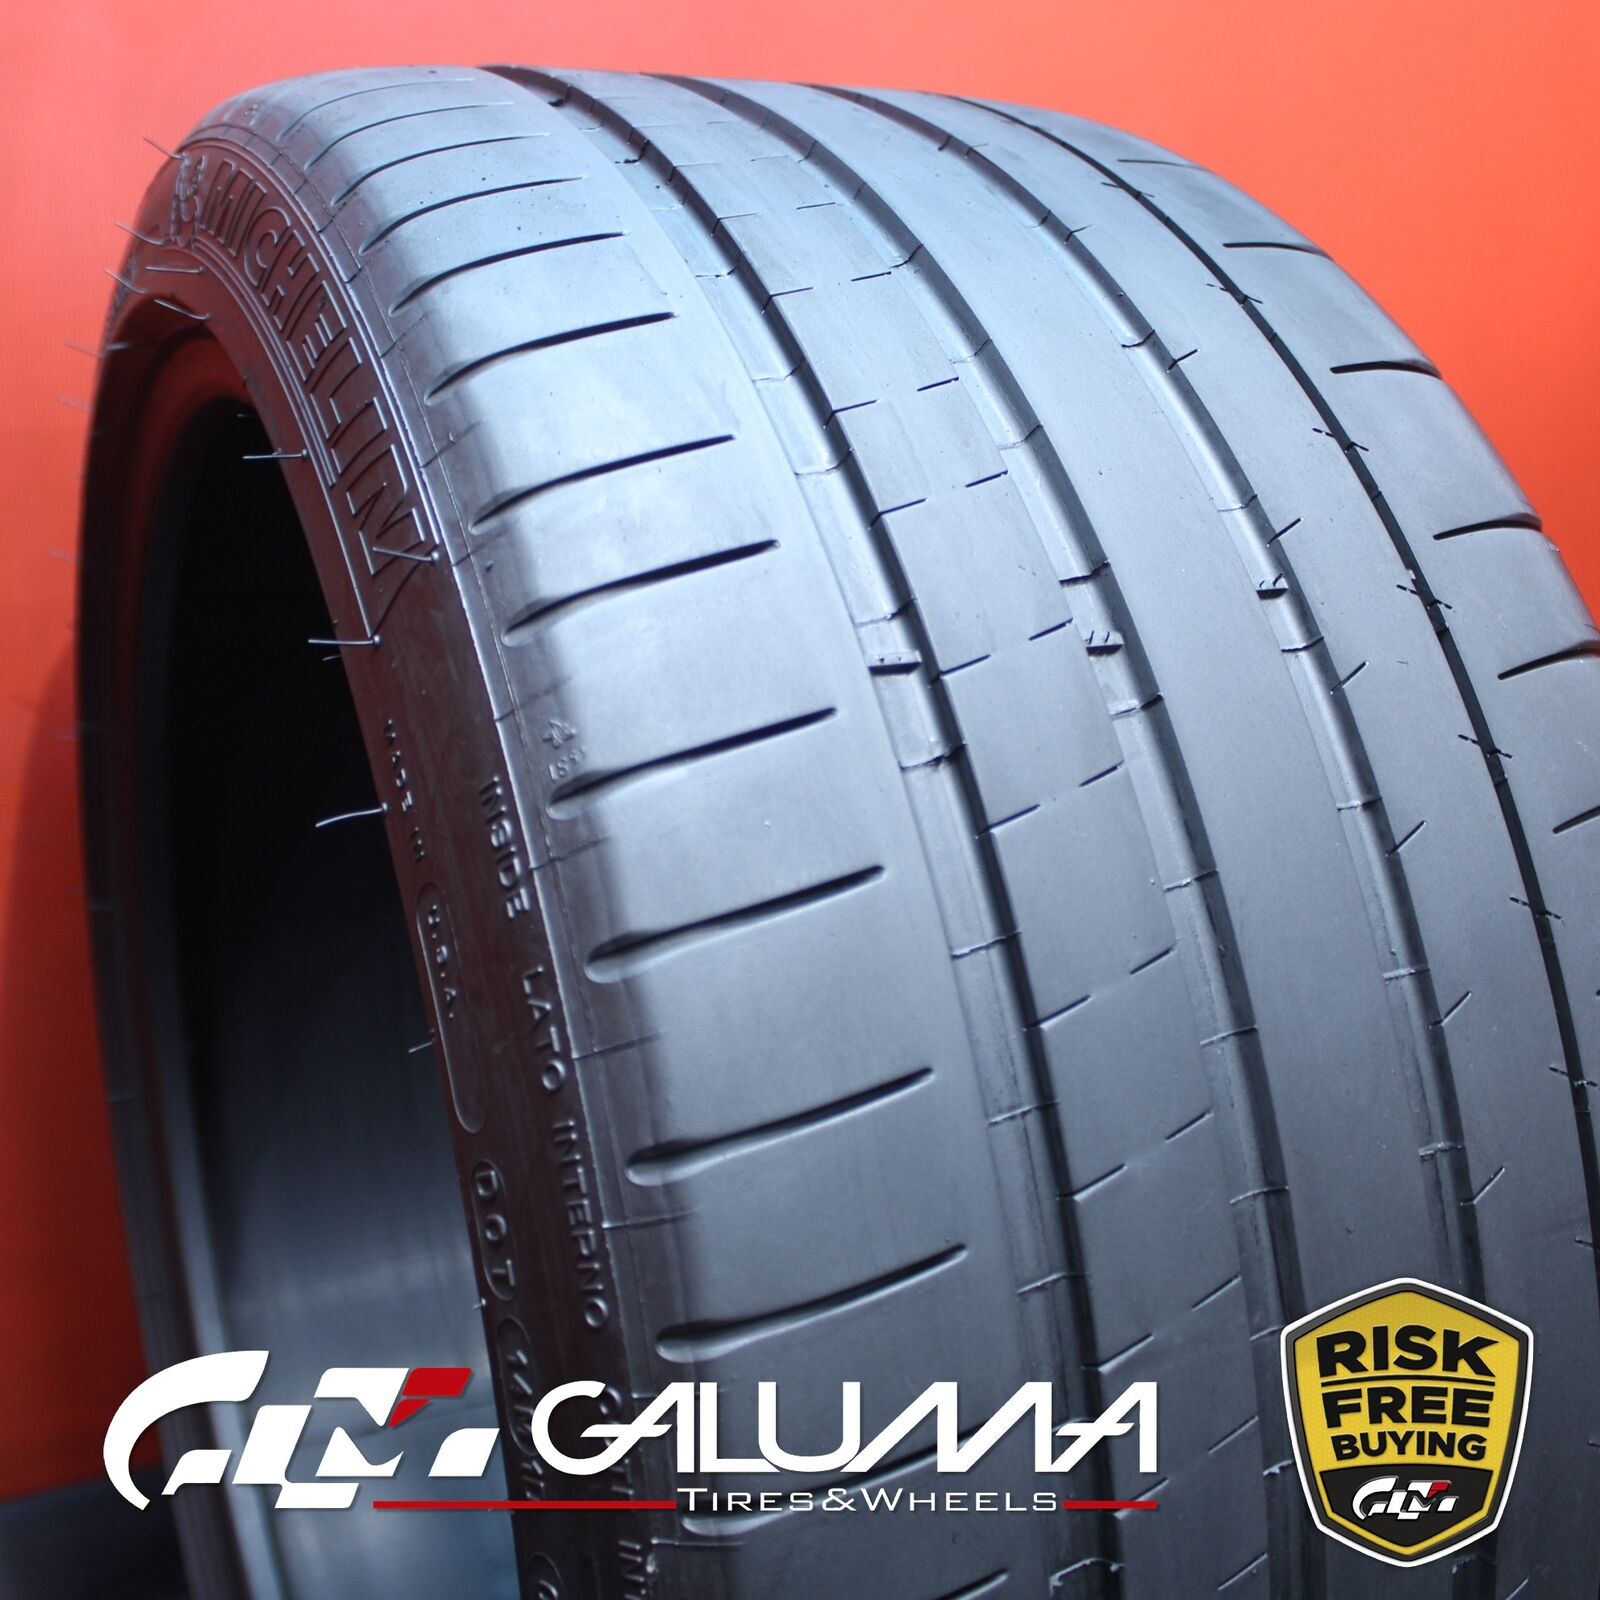 1 (One) Tire Michelin Pilot Super Sport 275/35ZR19 275/35/19 No Patch #78575